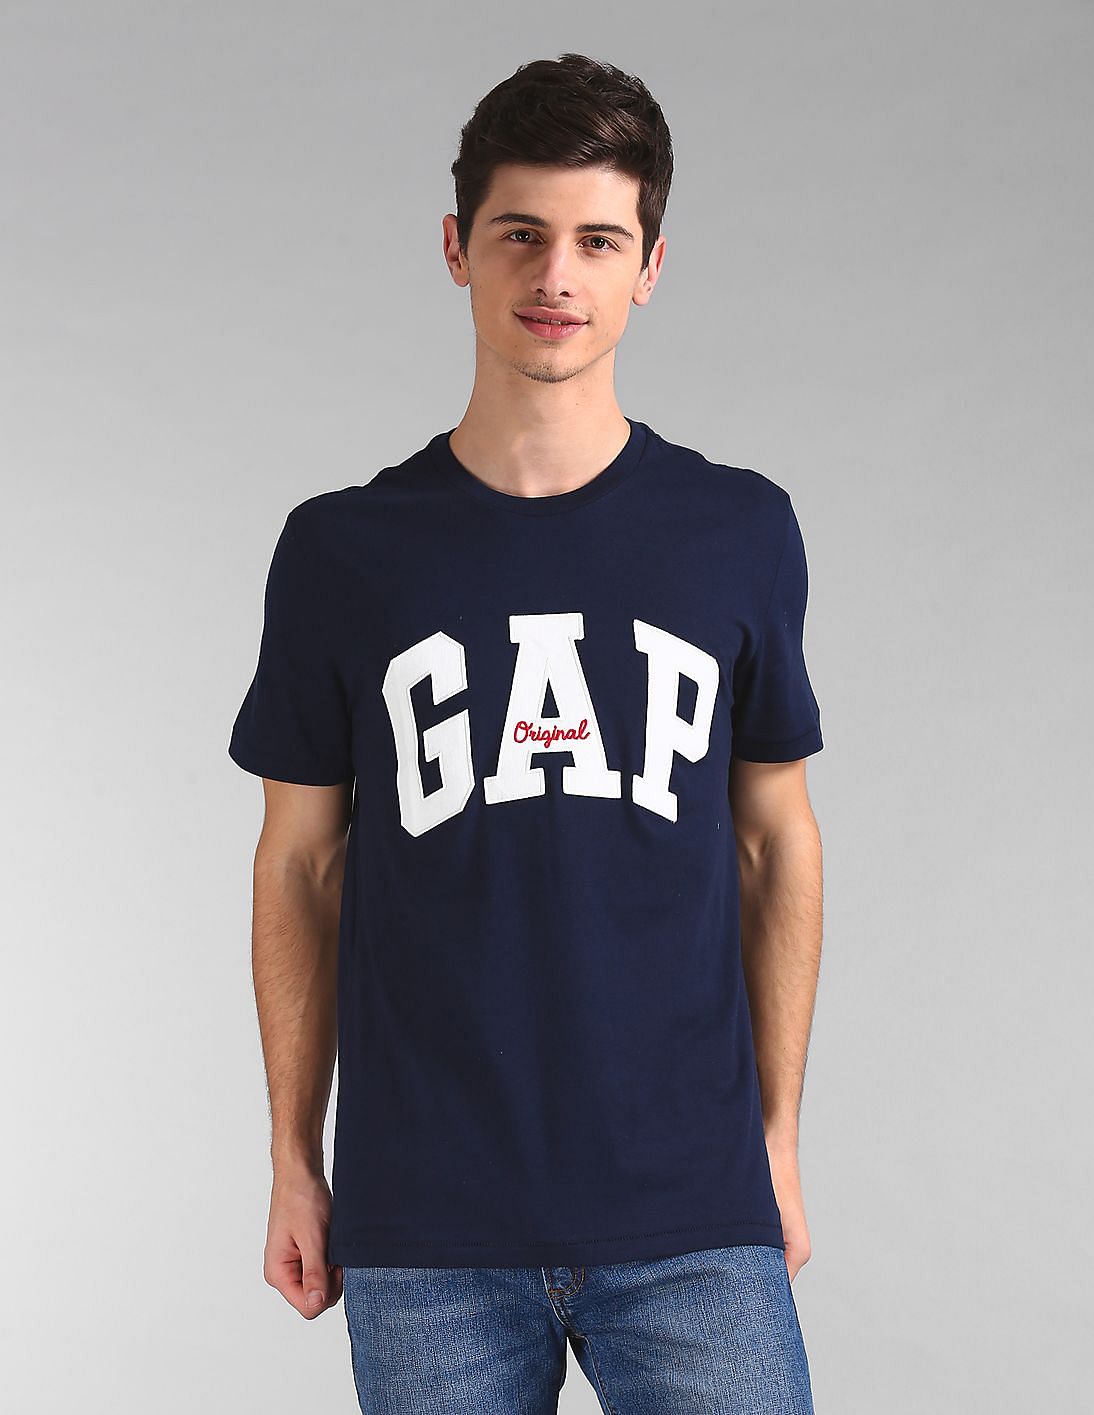 buy gap t shirts online